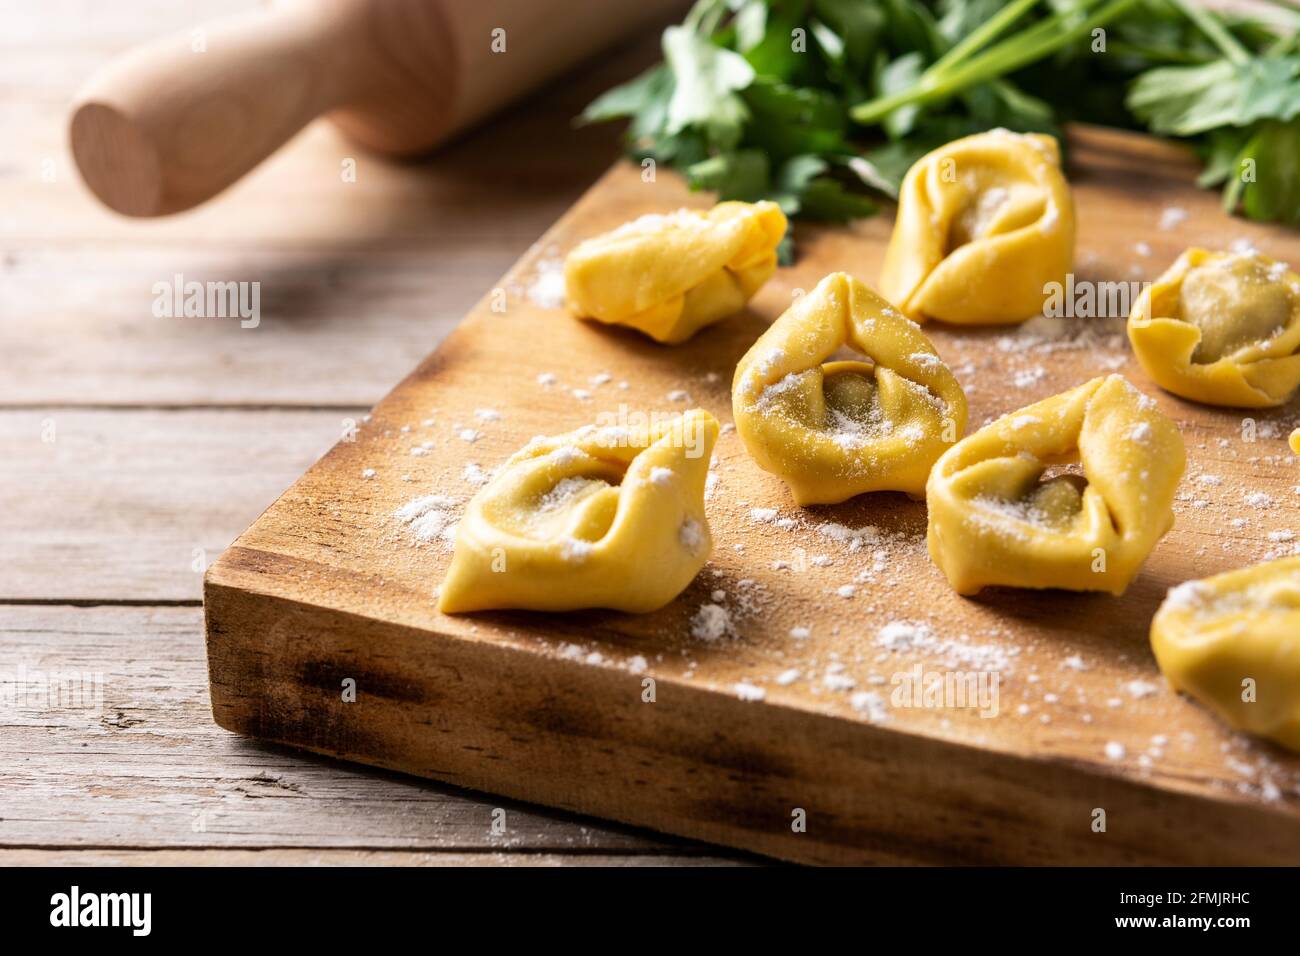 Uncooked pelmeni dumplings on wooden table Stock Photo